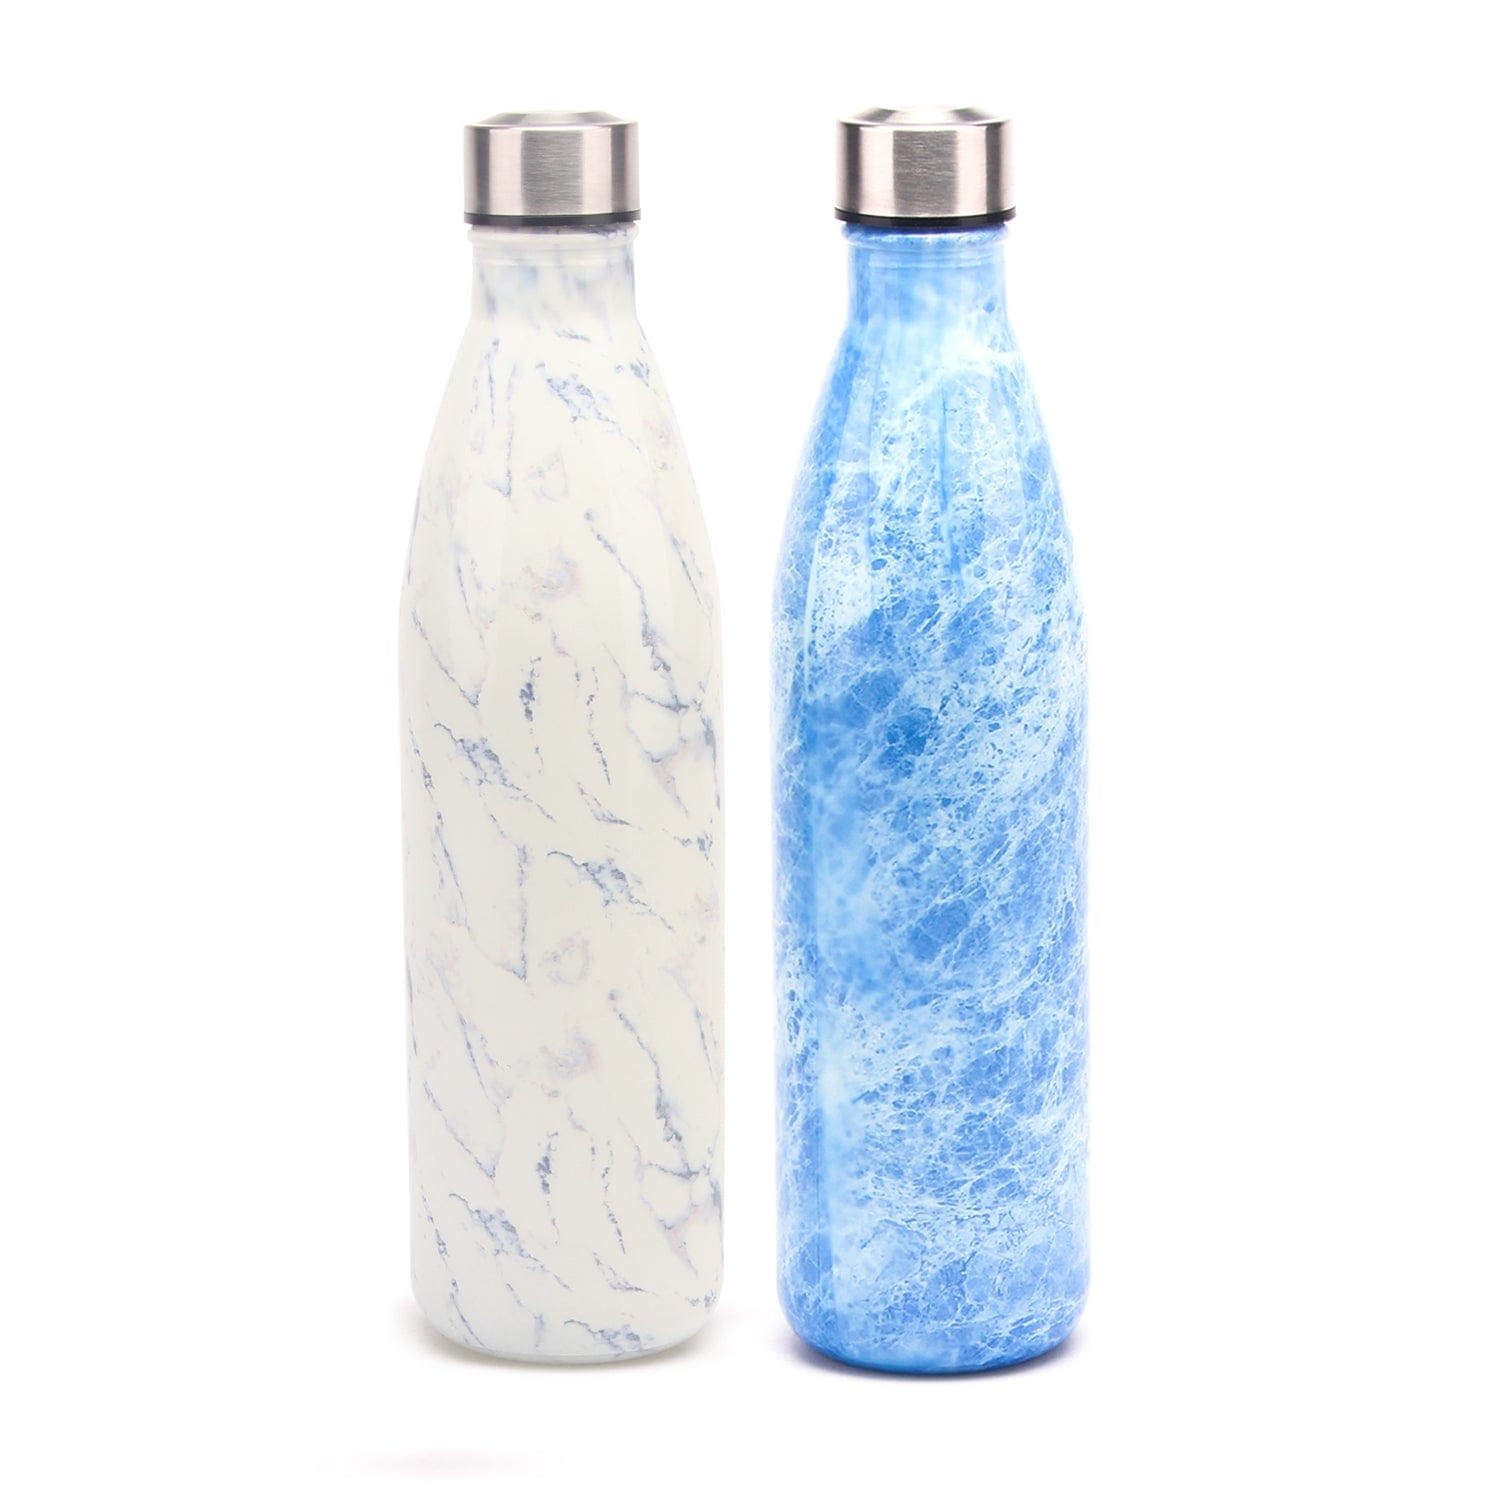 Red Butler Bottles Decorative Glass Bottle 1000ml | 2pcs Set | White & Blue DGBF10A1 Redbutler